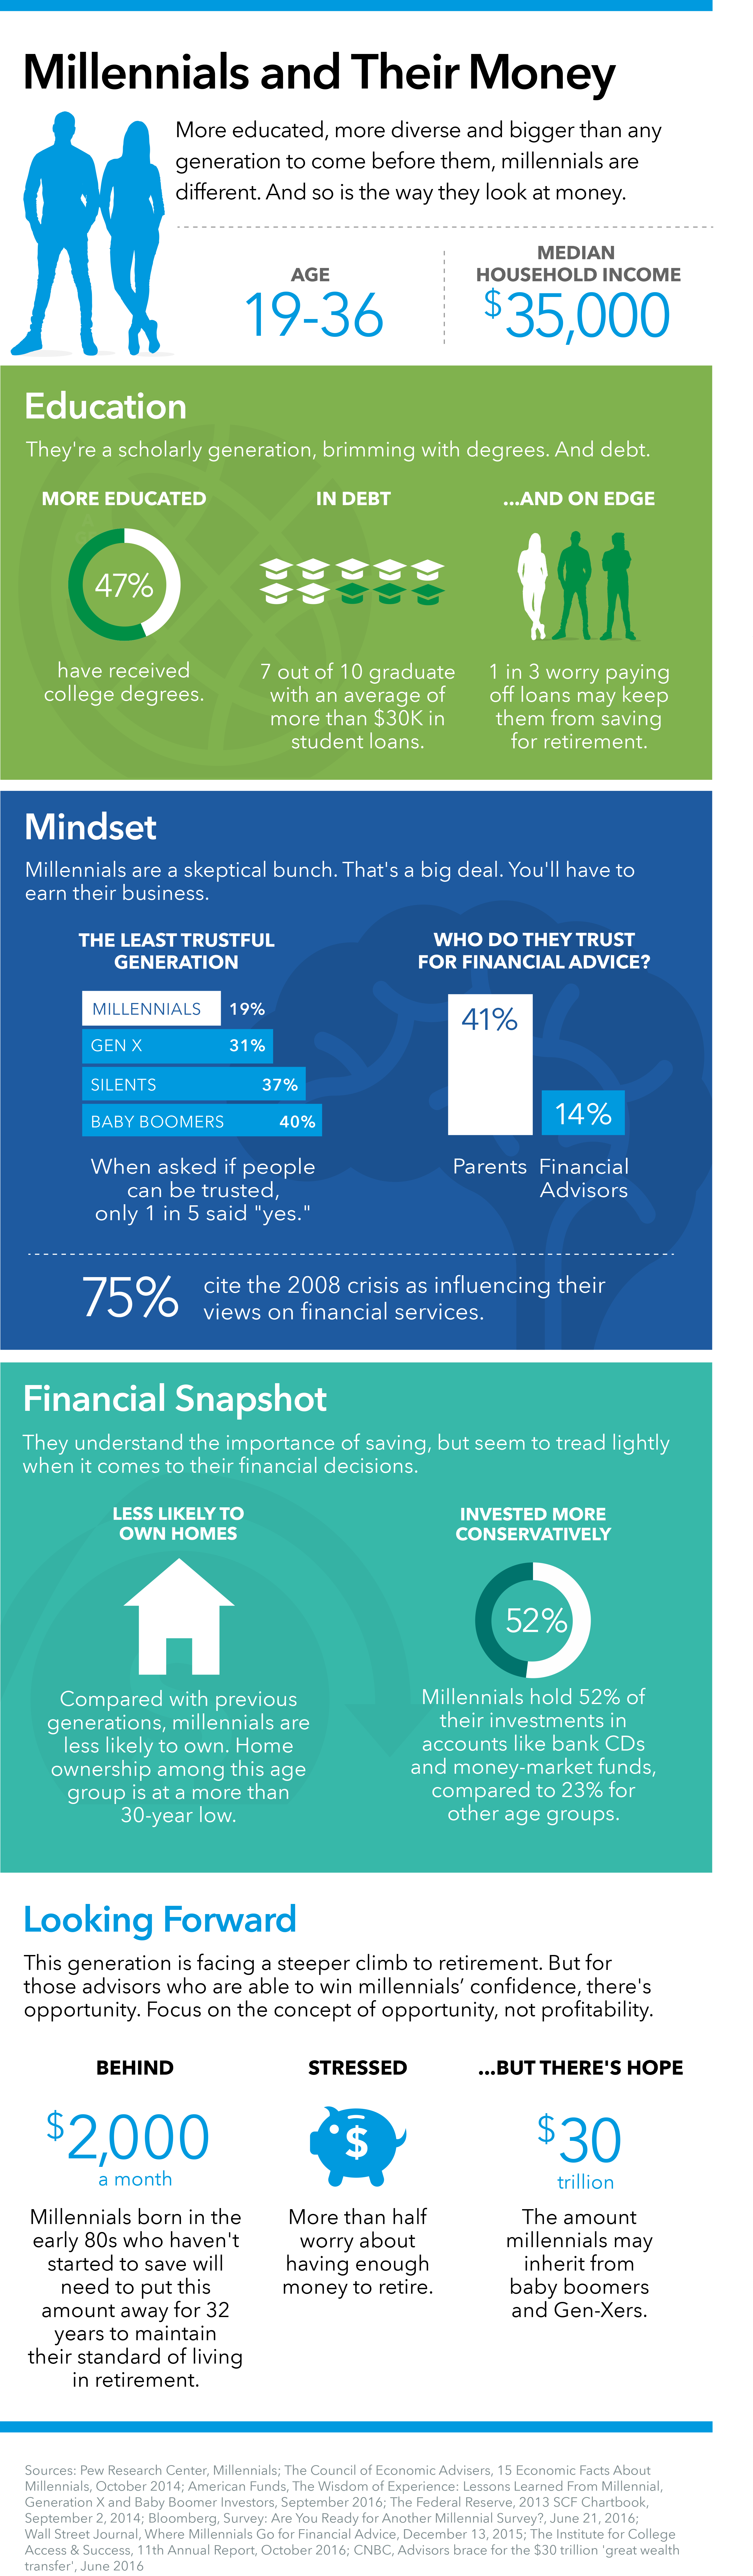 millennials are different millennial_investor_infographic_sjr_article-2